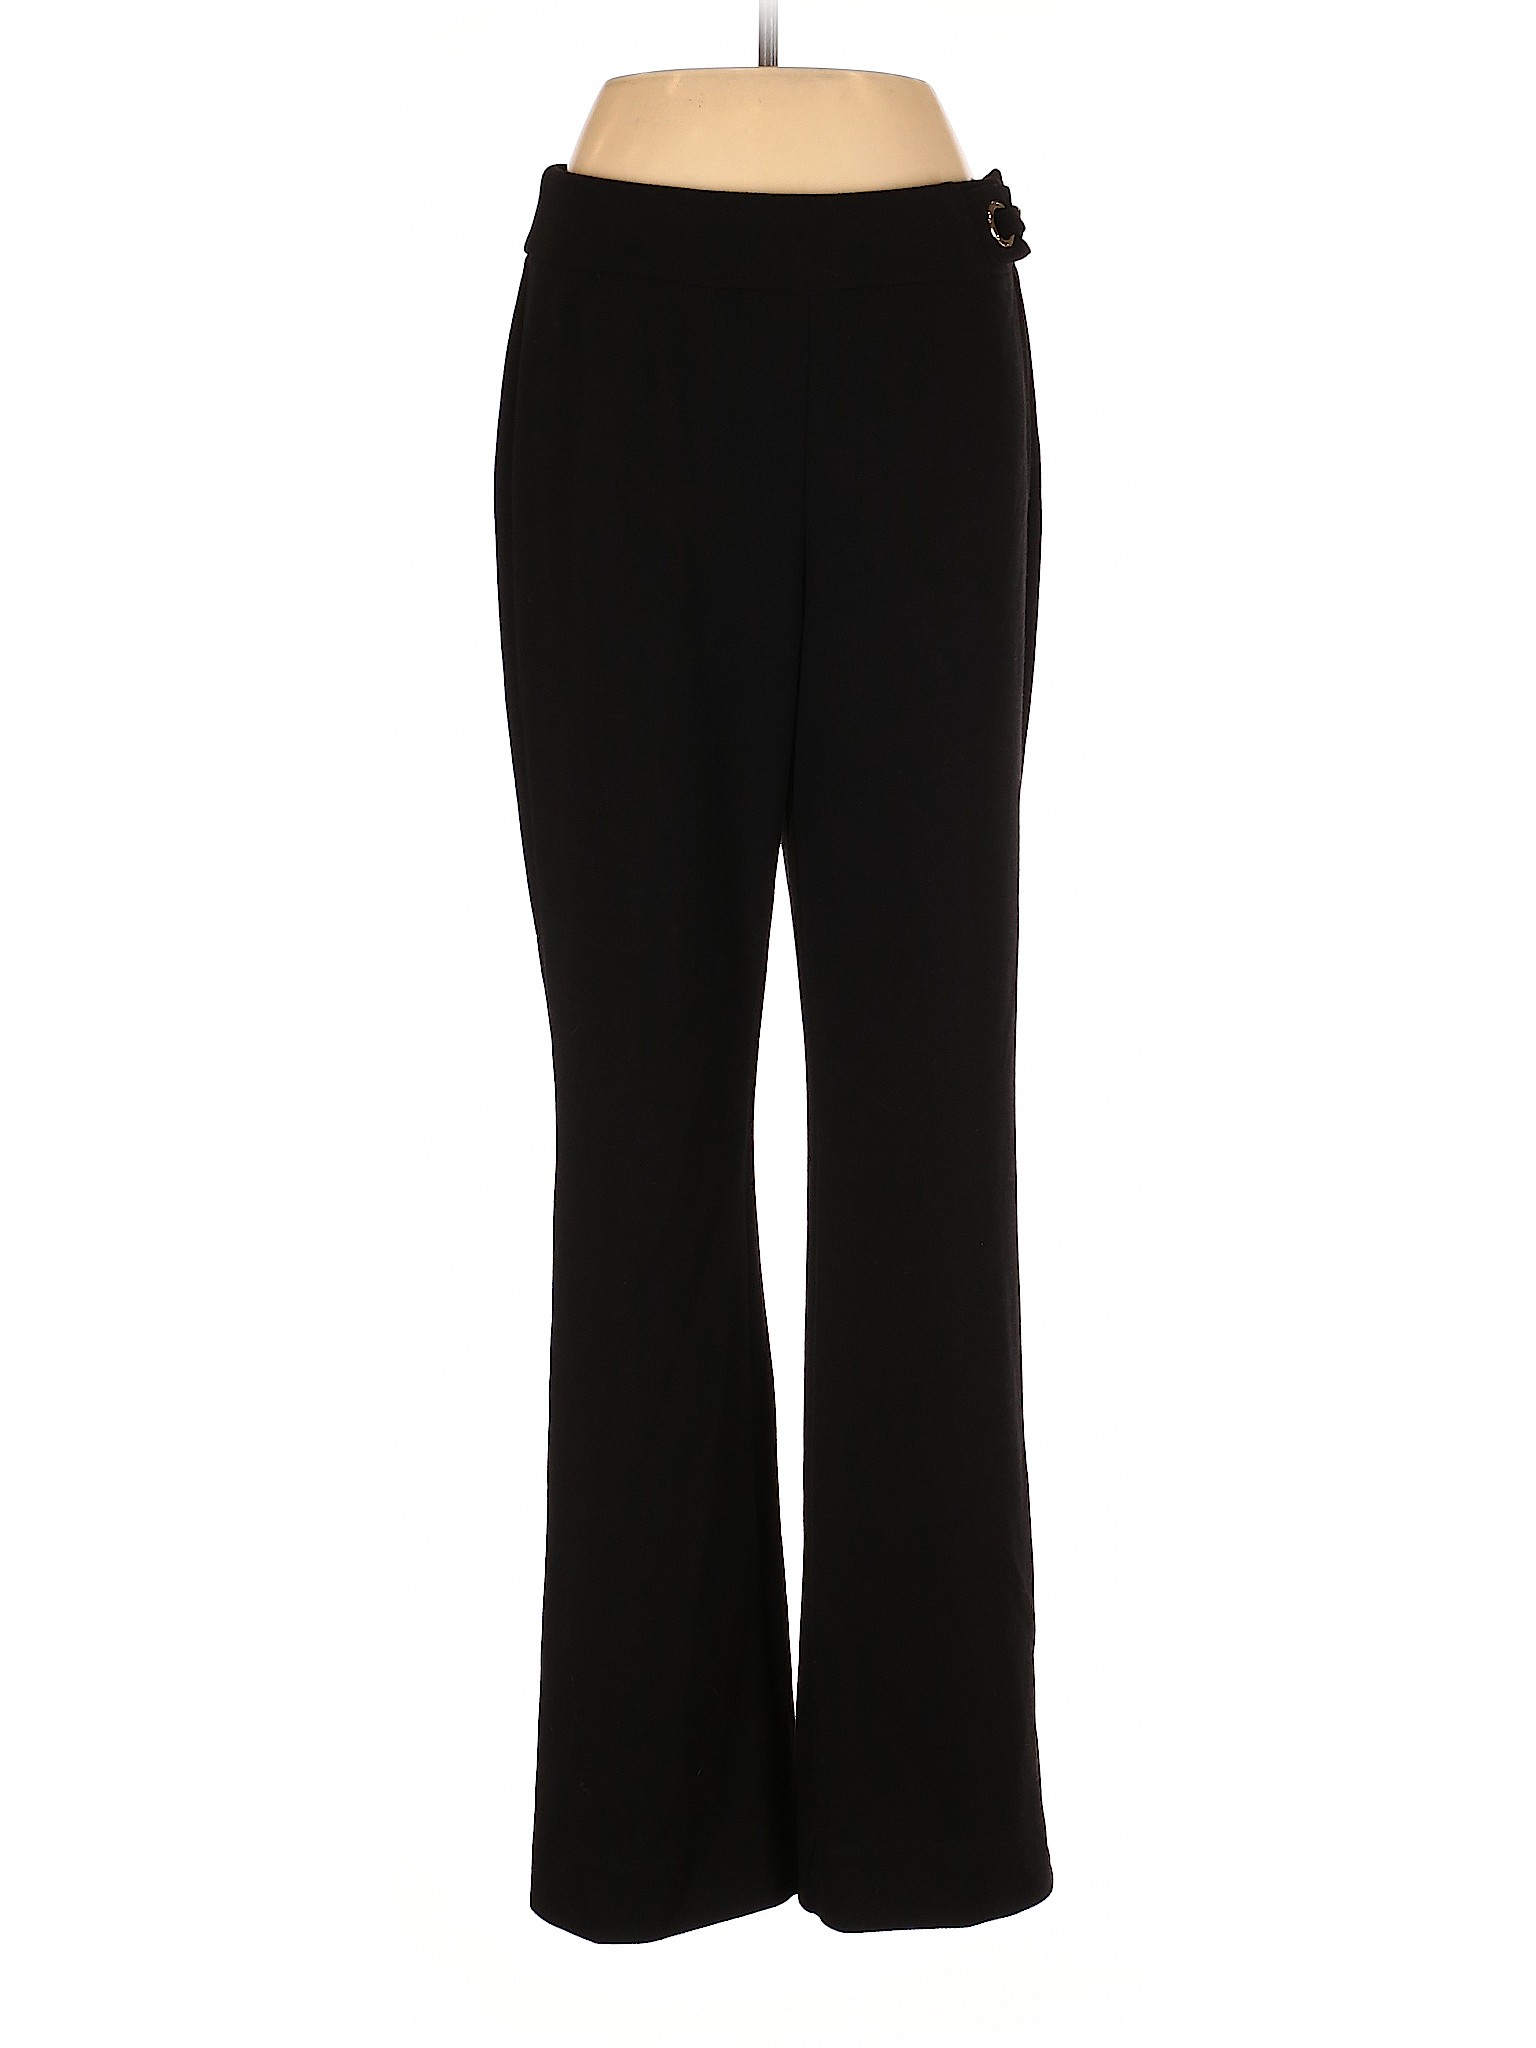 Chico's Women Black Casual Pants M | eBay